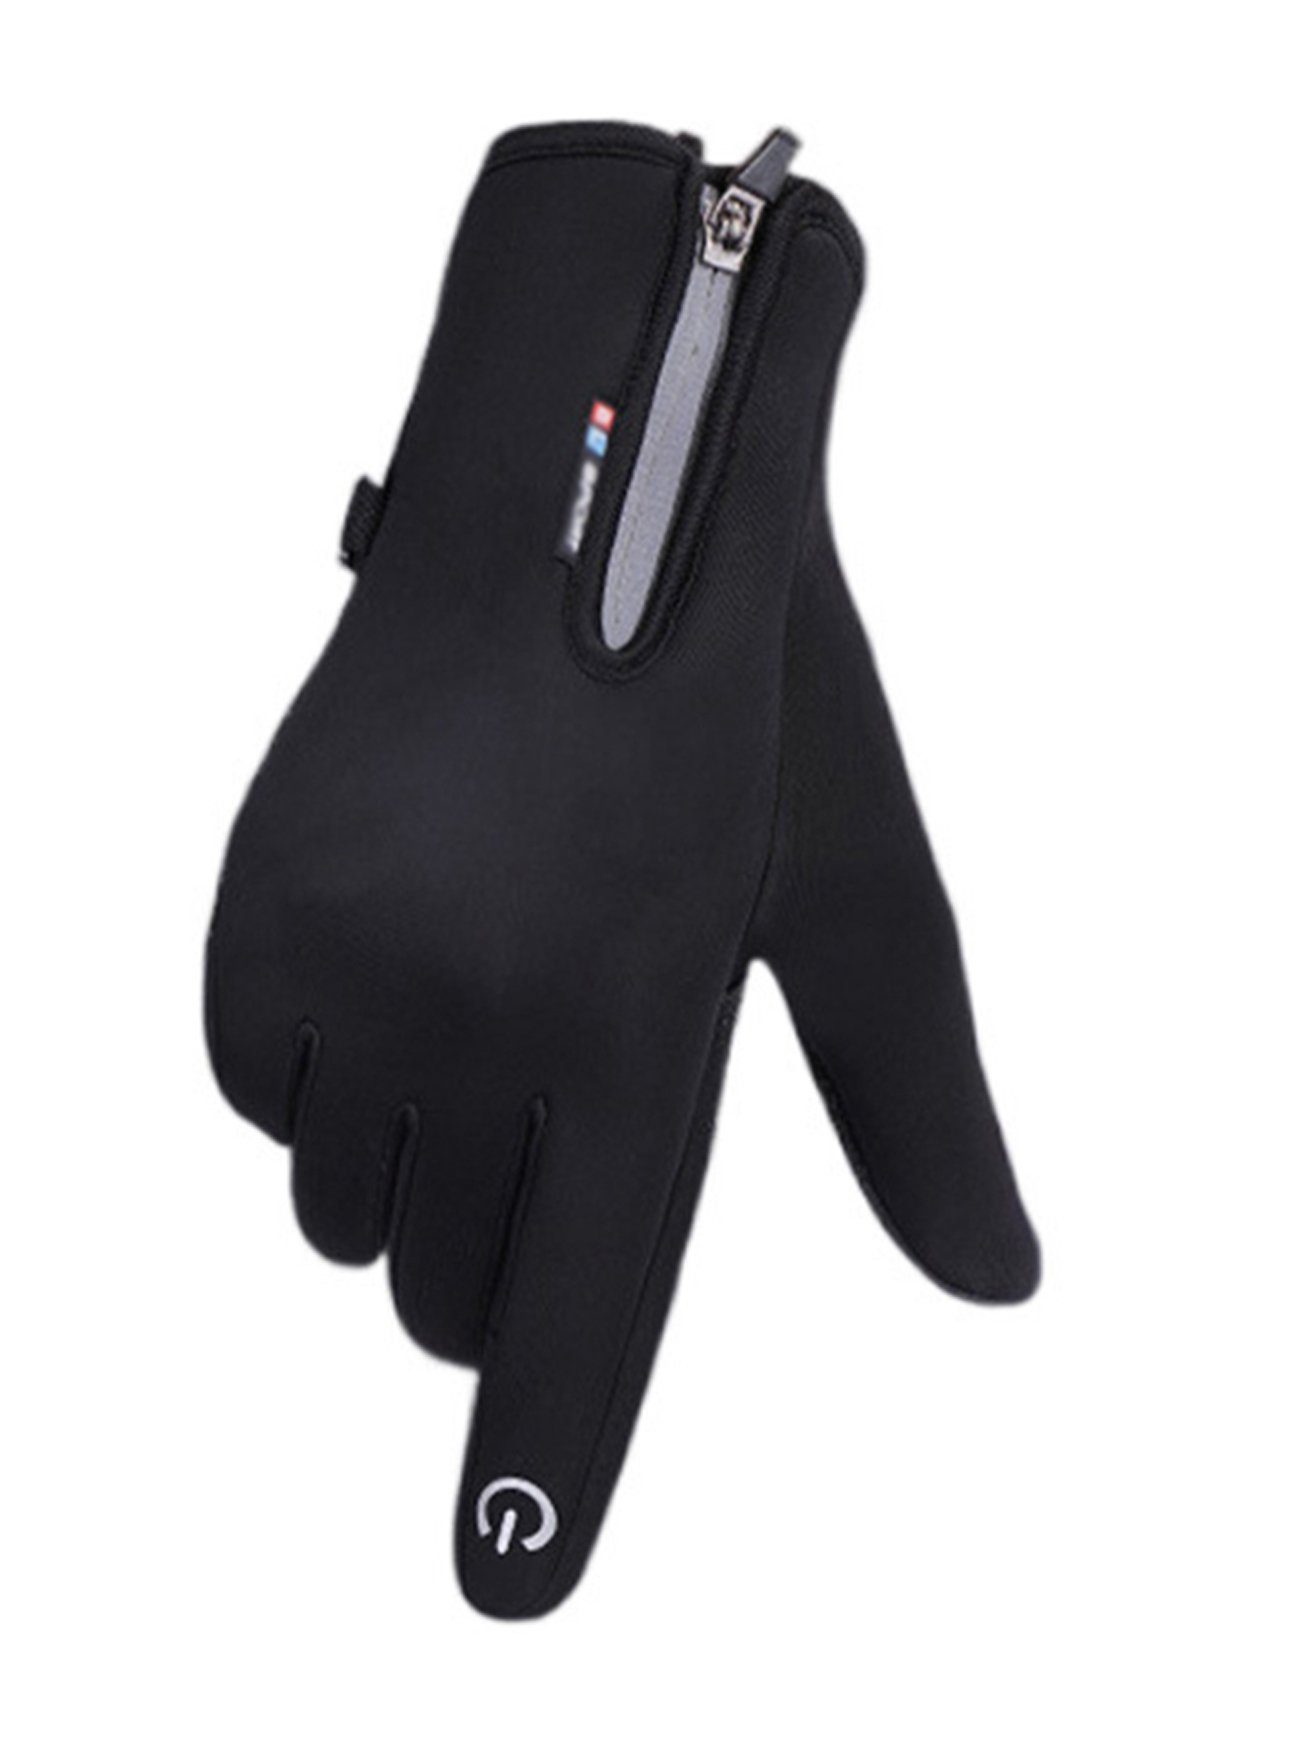 HOHEA H Reithandschuhe Warme Handschuhe, Touchscreen-Handschuhe für Damen und Herren wasserdichte Touchscreen-Handschuhe, Handschuhe befreien